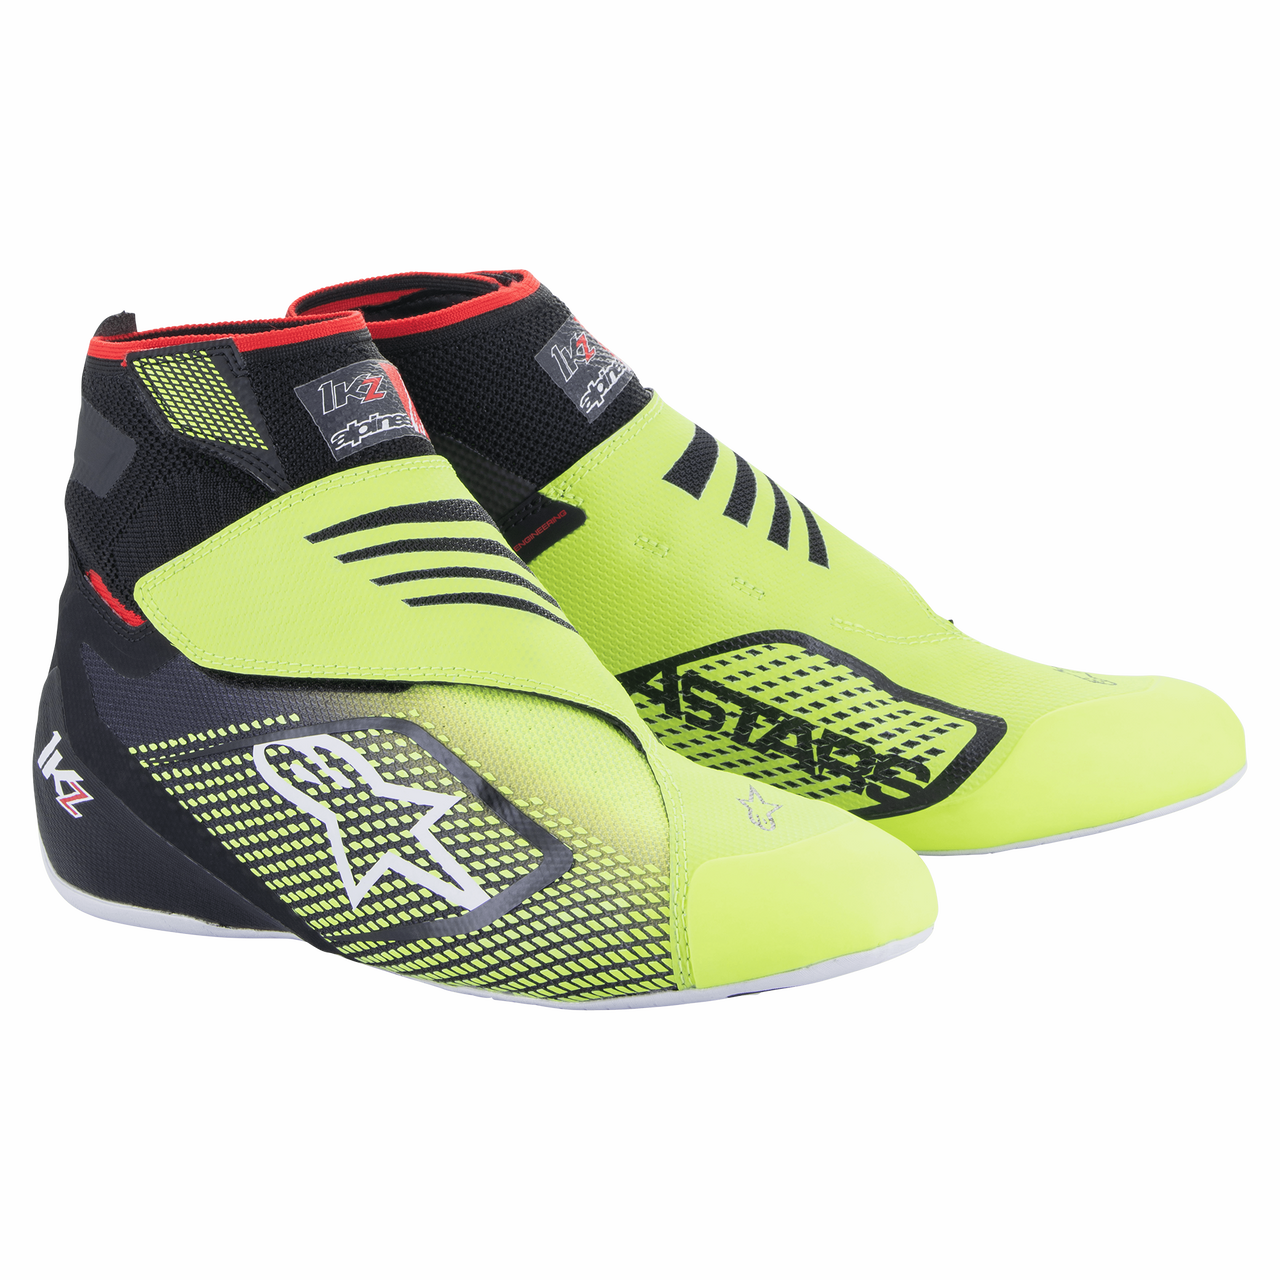 Tech-1 KZ V2 Shoes Alpinestars | Alpinestars® Official Site